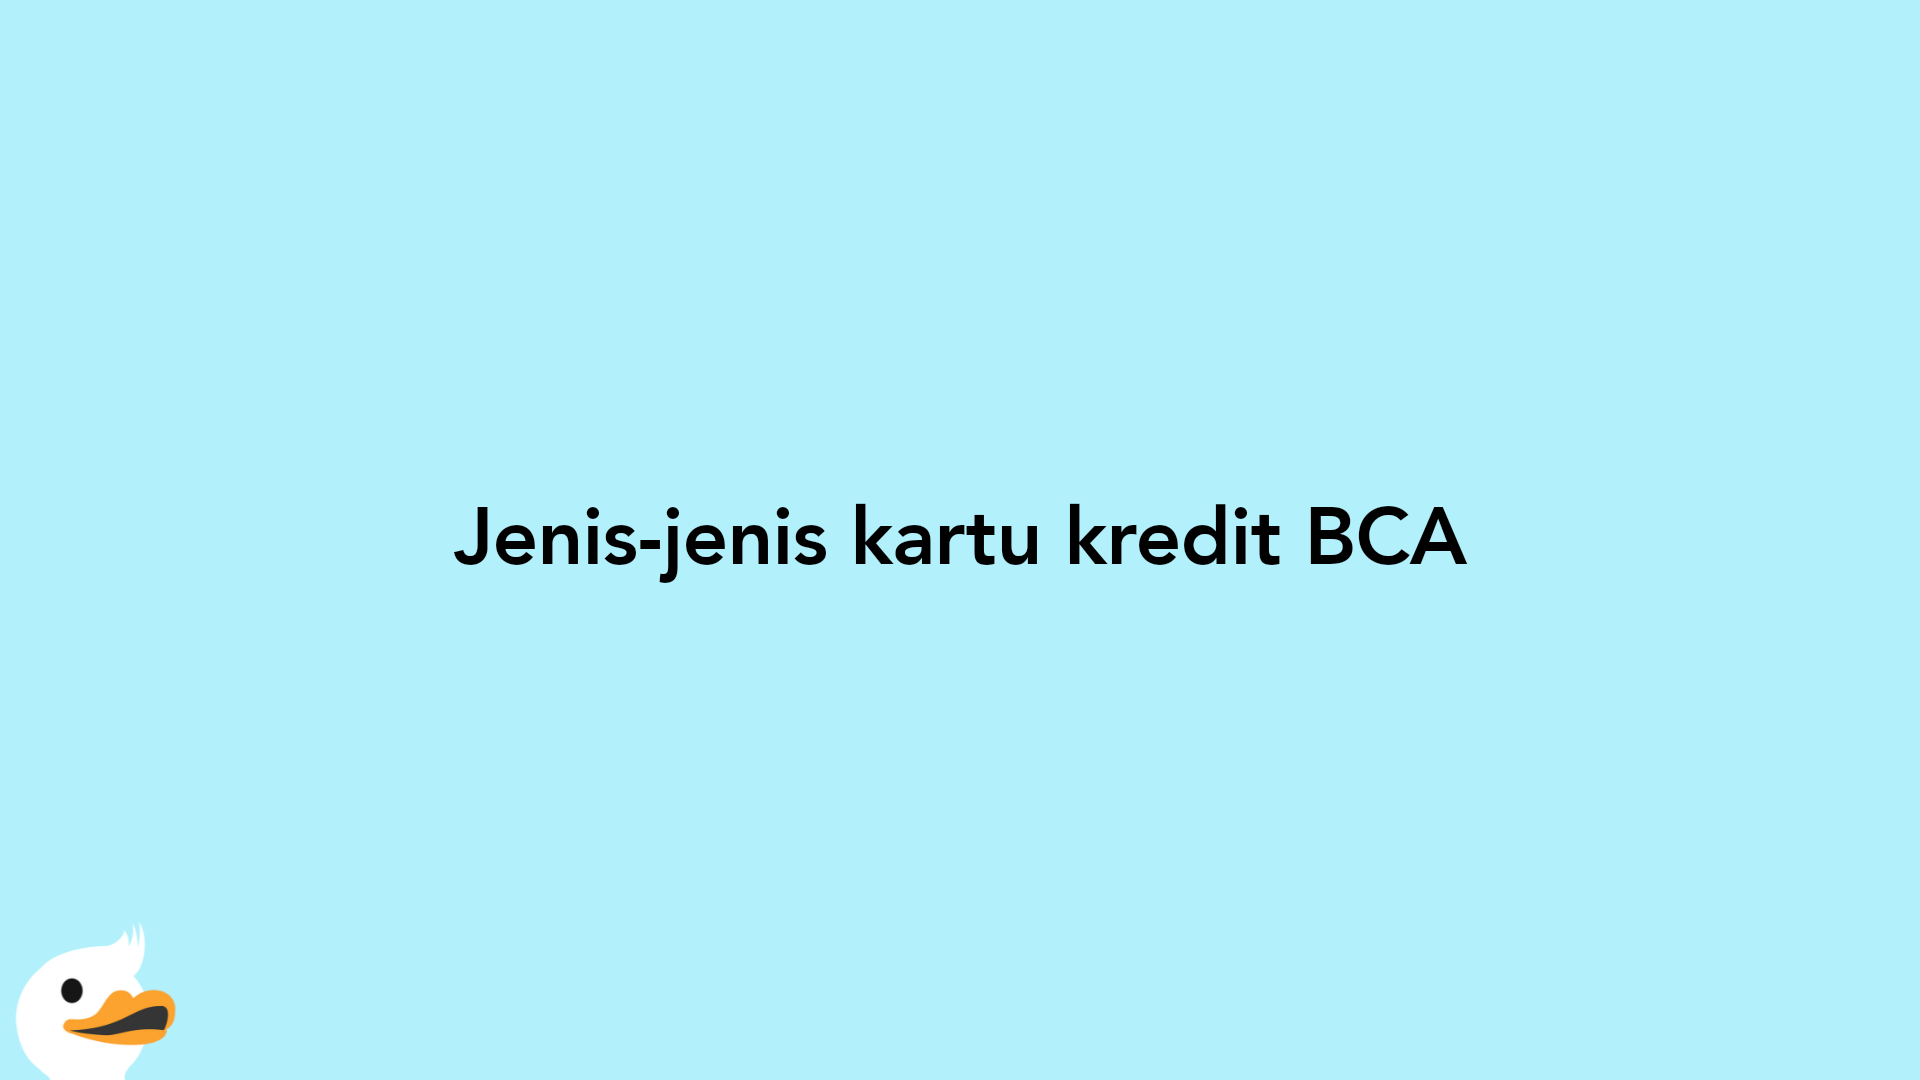 Jenis-jenis kartu kredit BCA